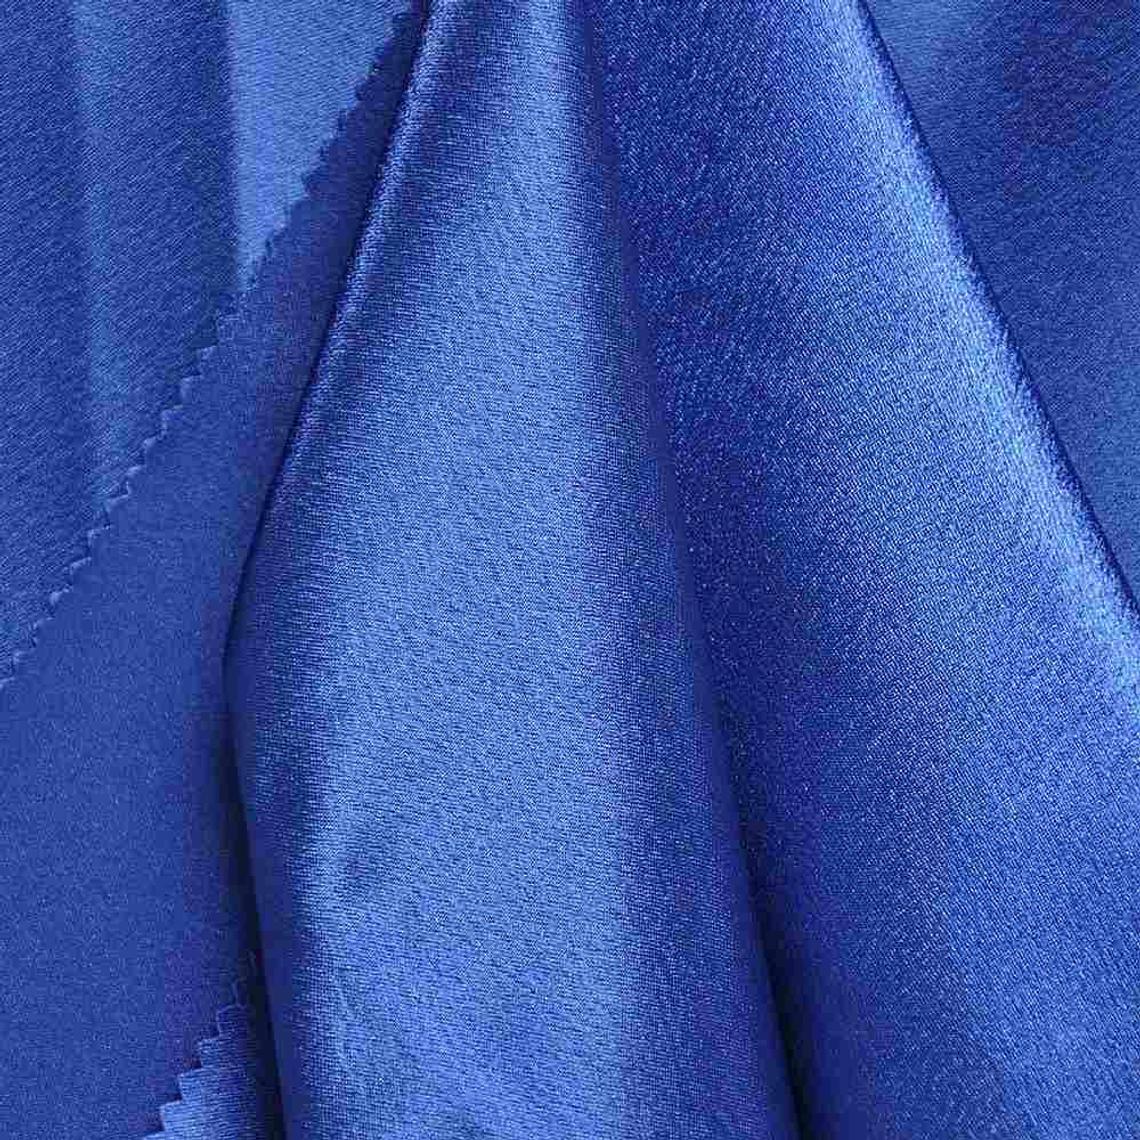 58/60 Royal Blue Crepe Back Satin Fabric Per Yard 100% Polyester